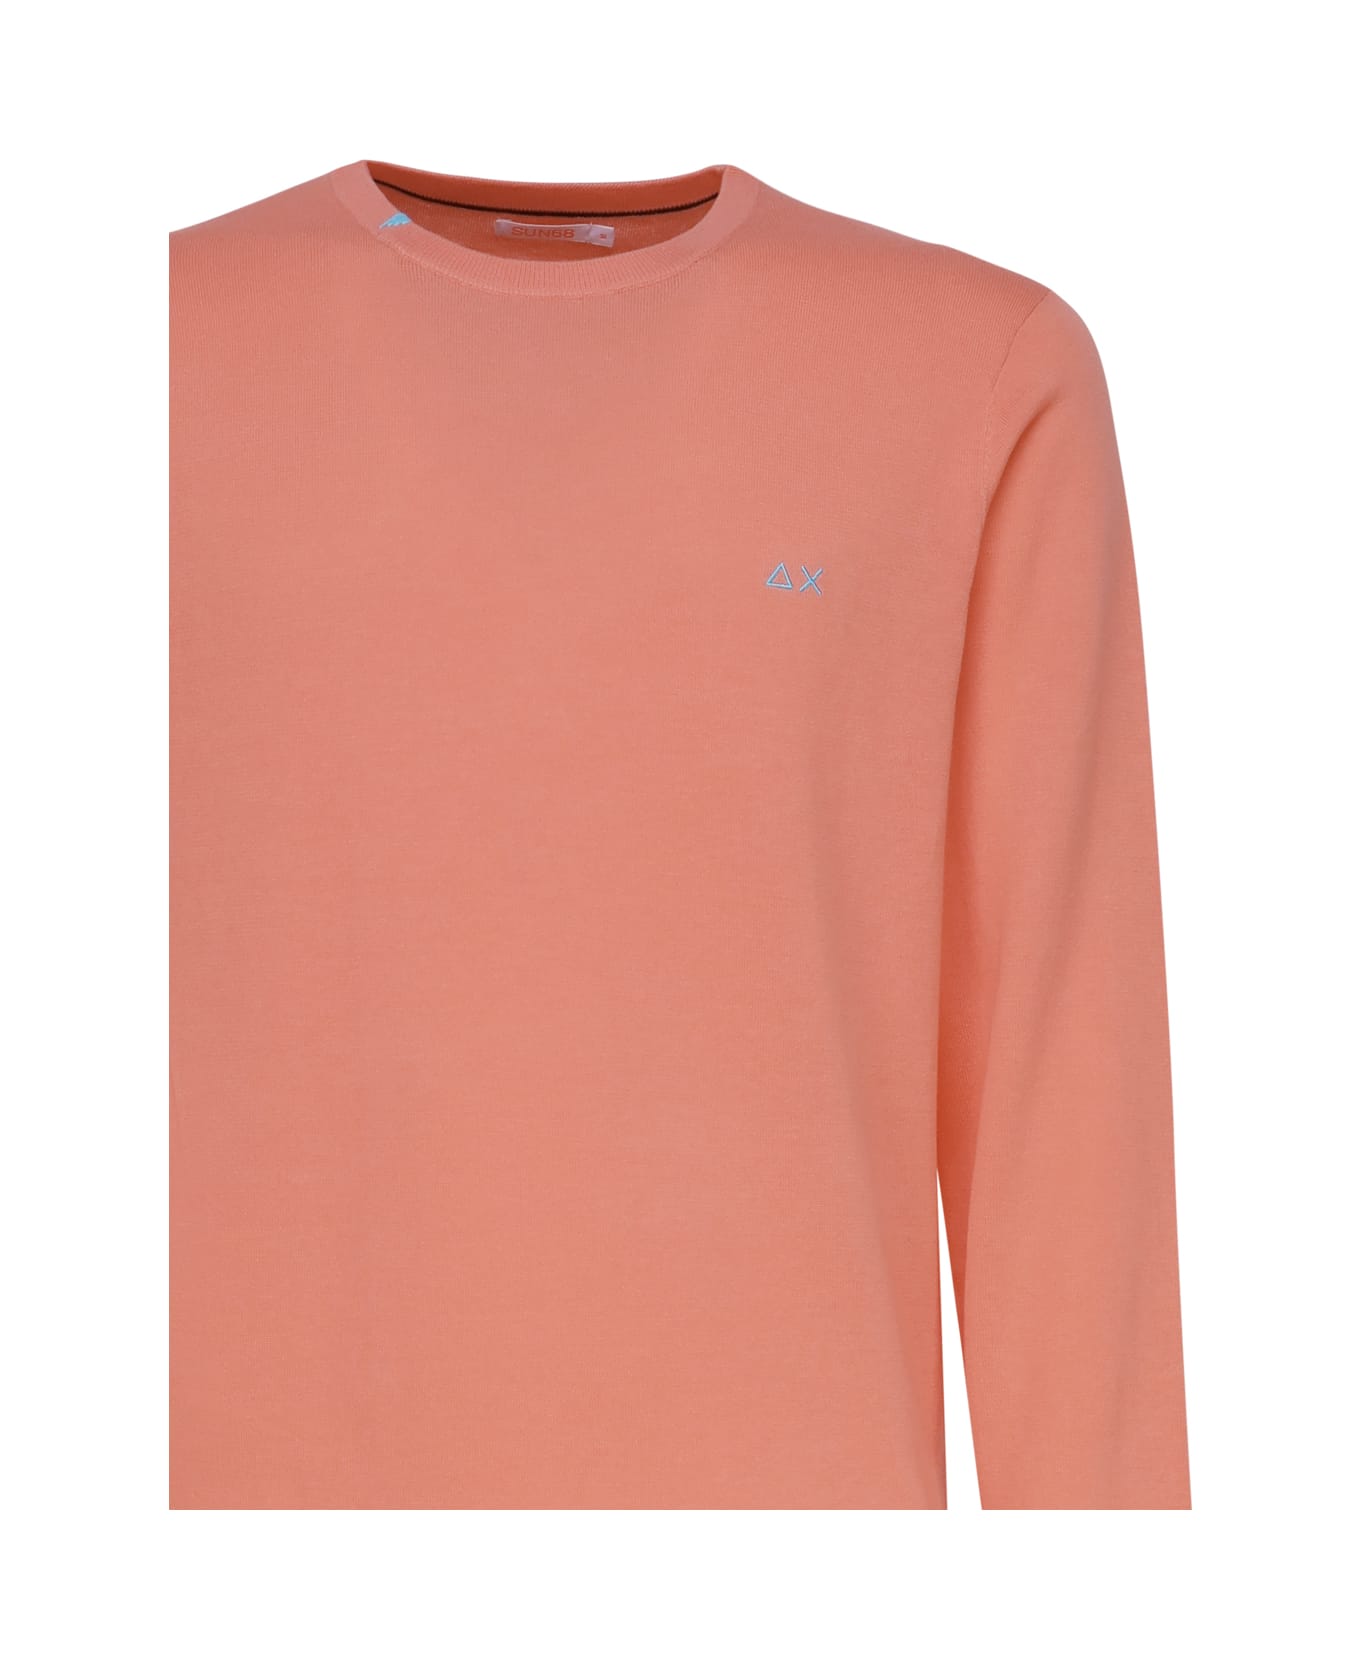 Sun 68 Sweater With Logo - Pink ニットウェア